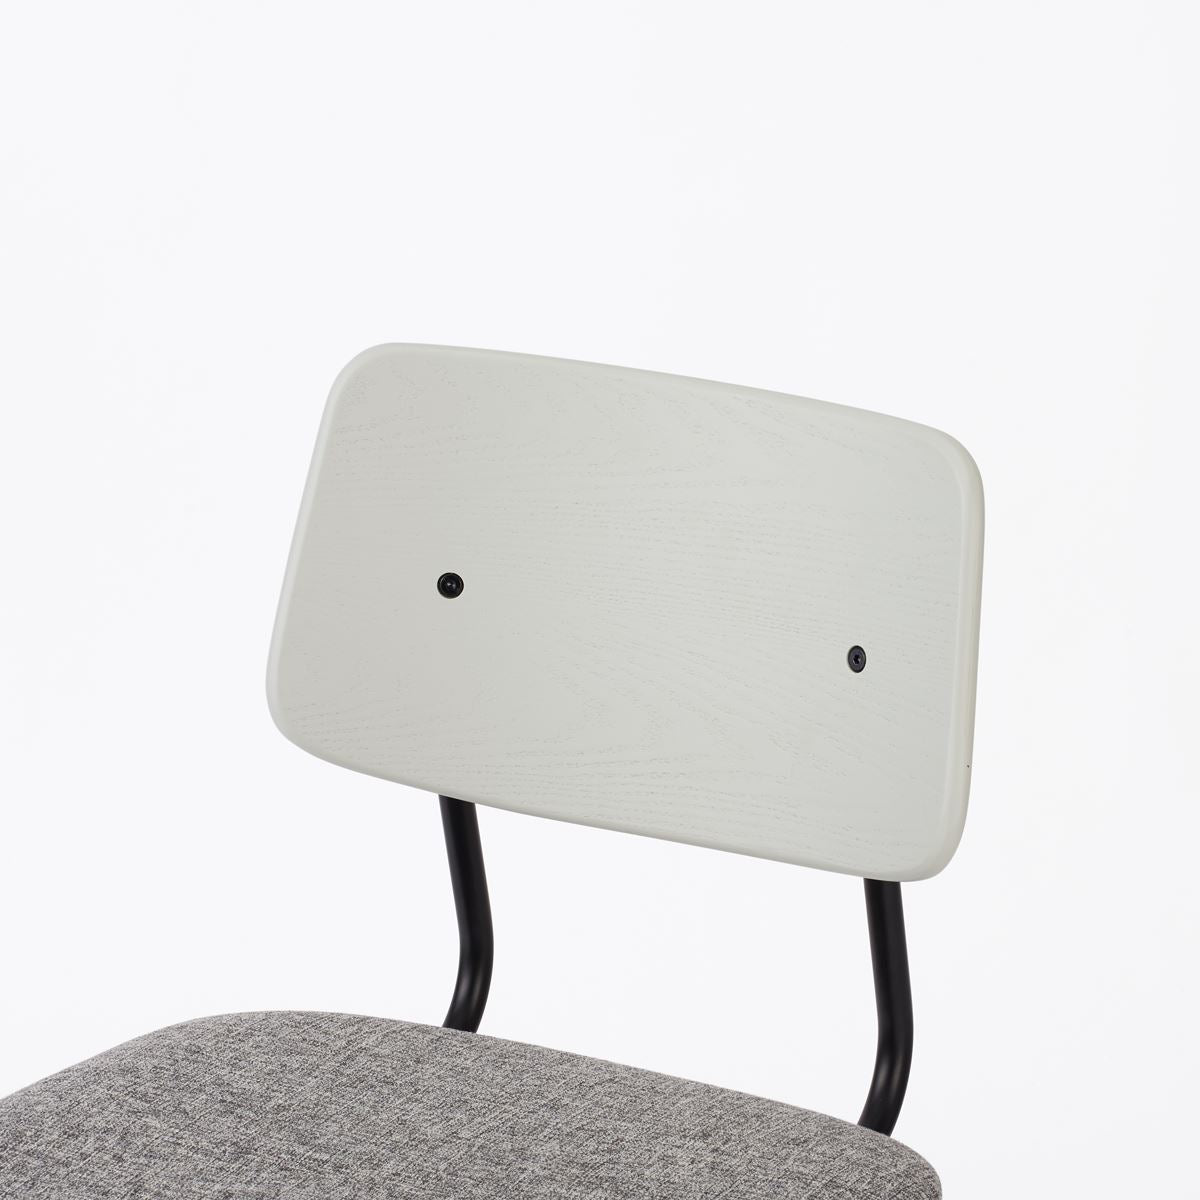 KUUM  Chair shikaku - Black Steel Frame/Cushion/Gray White Back / クーム チェア シカク